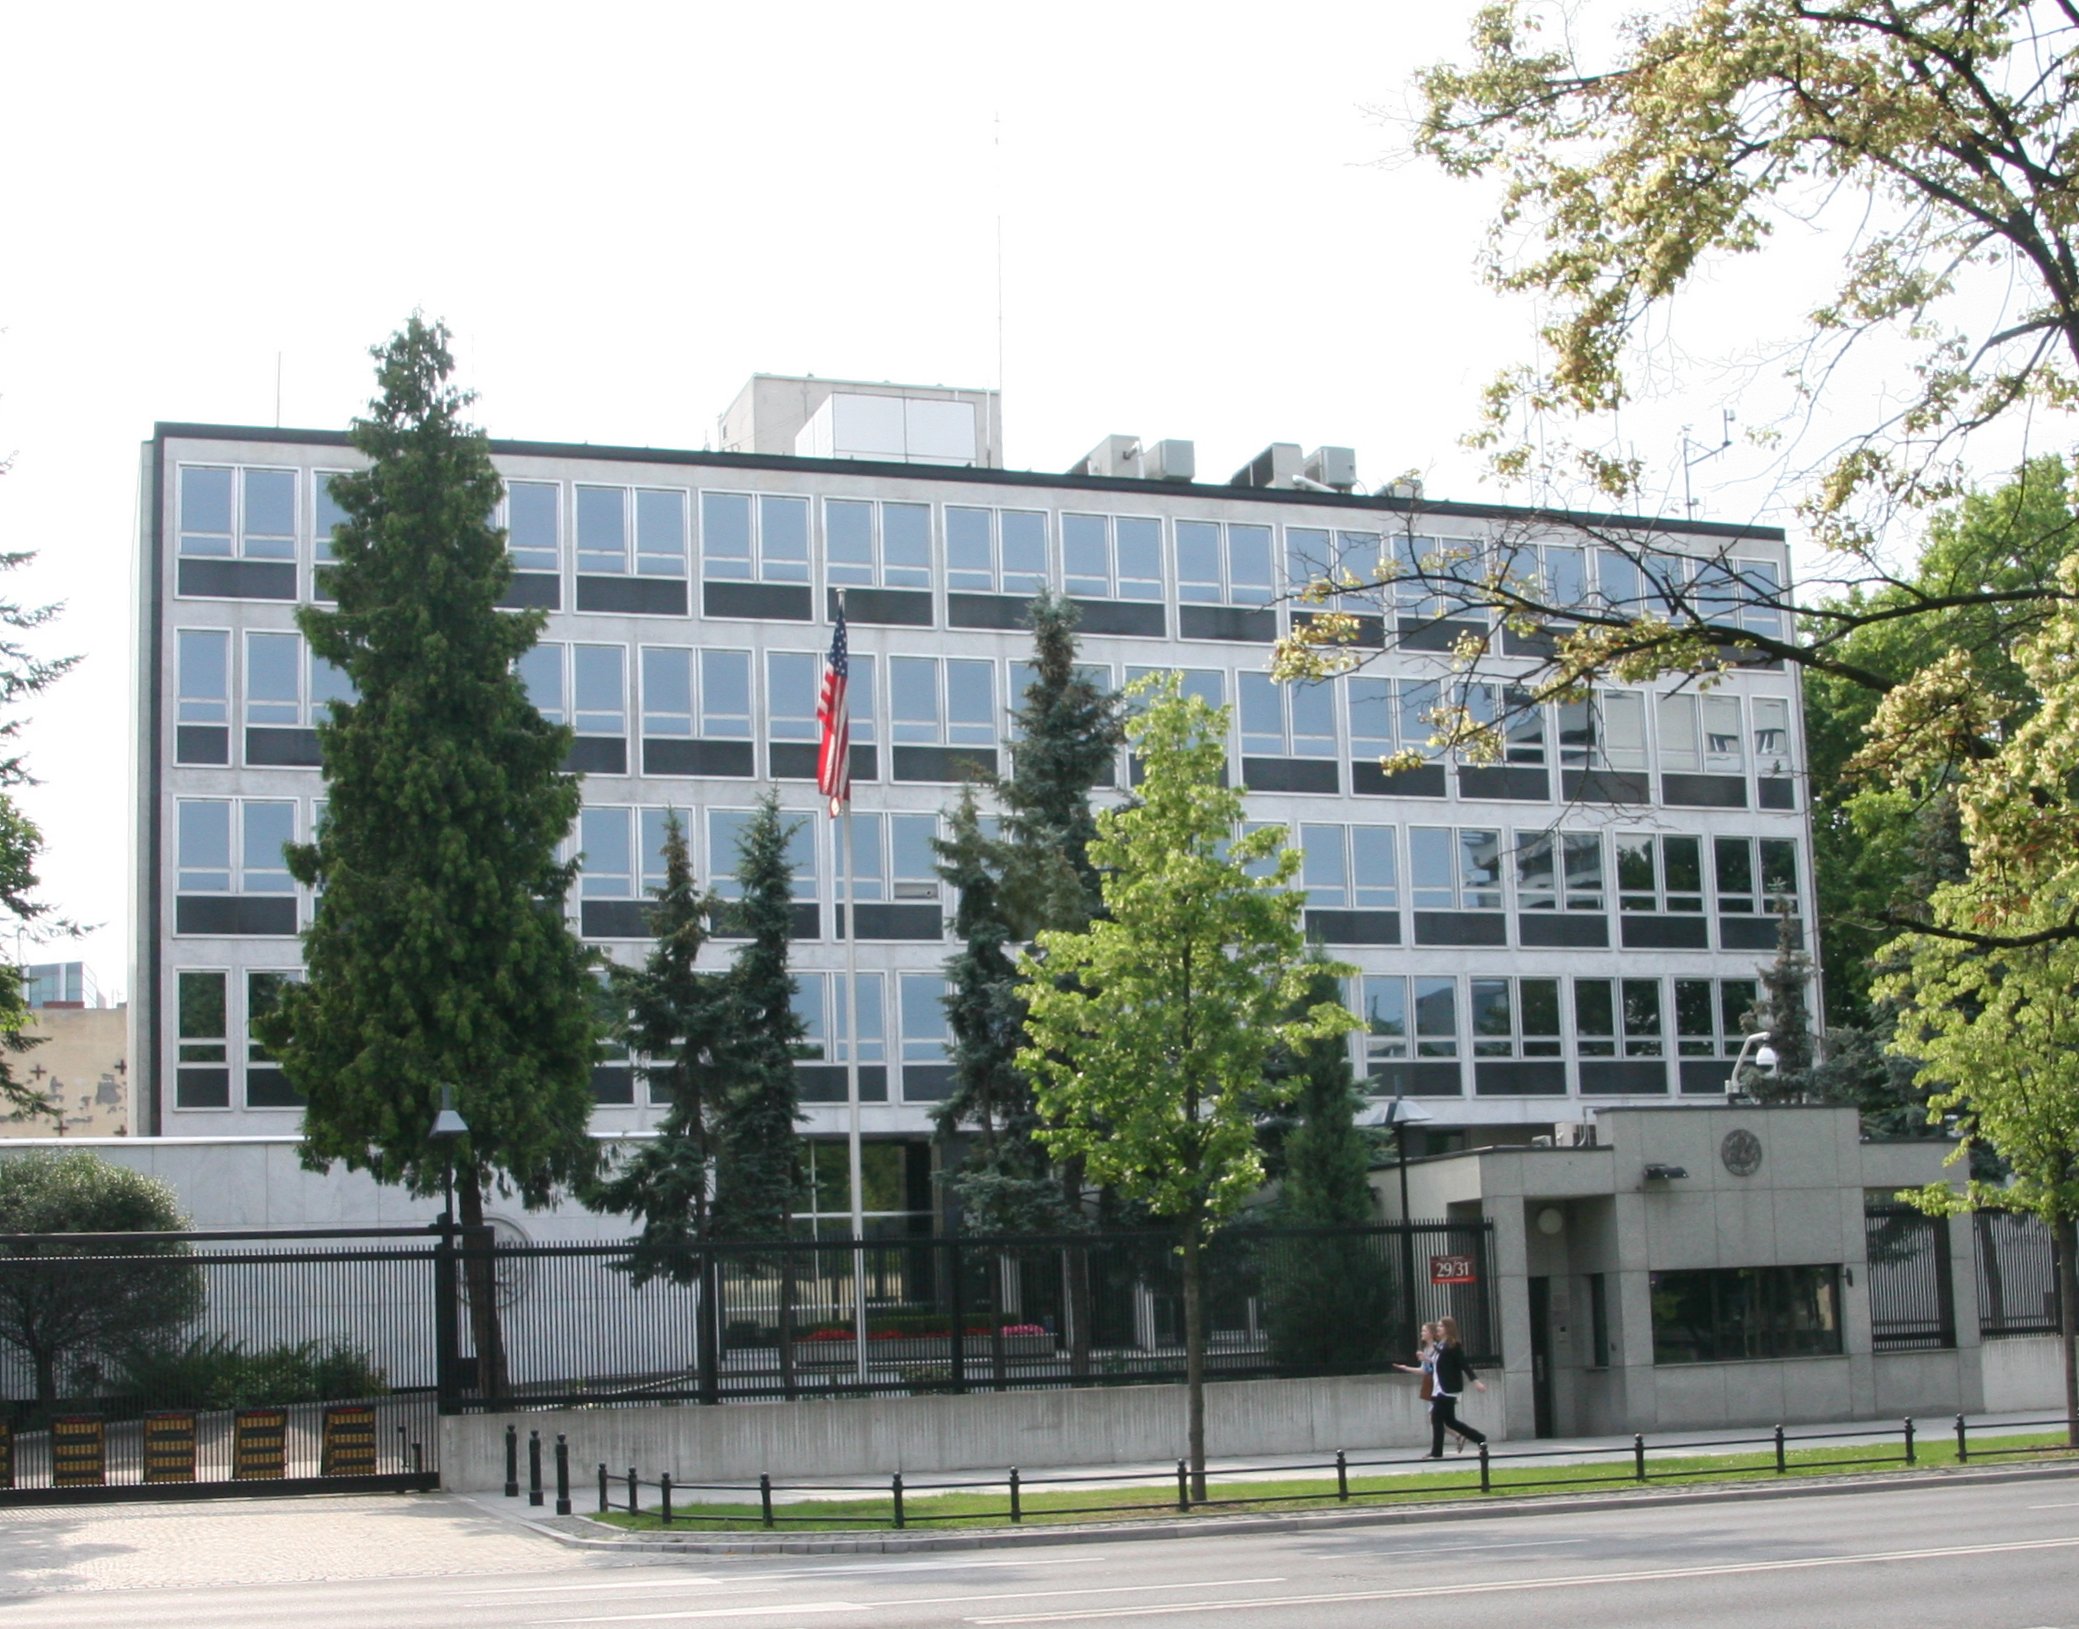 United States embassy Main Building